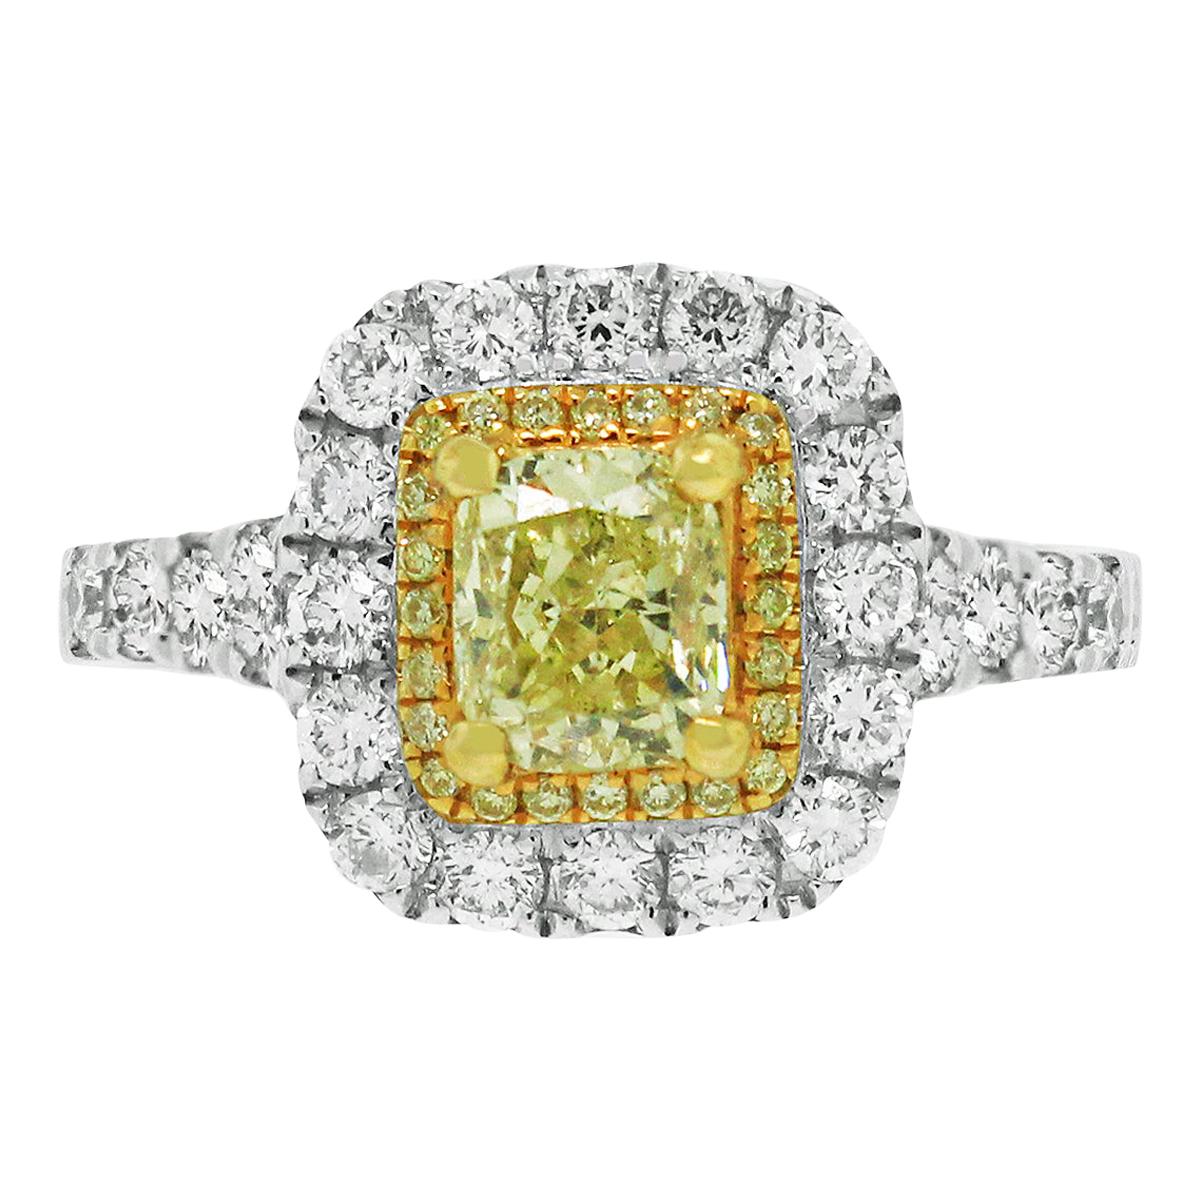 1.08 Carat Yellow Diamond Engagement Ring